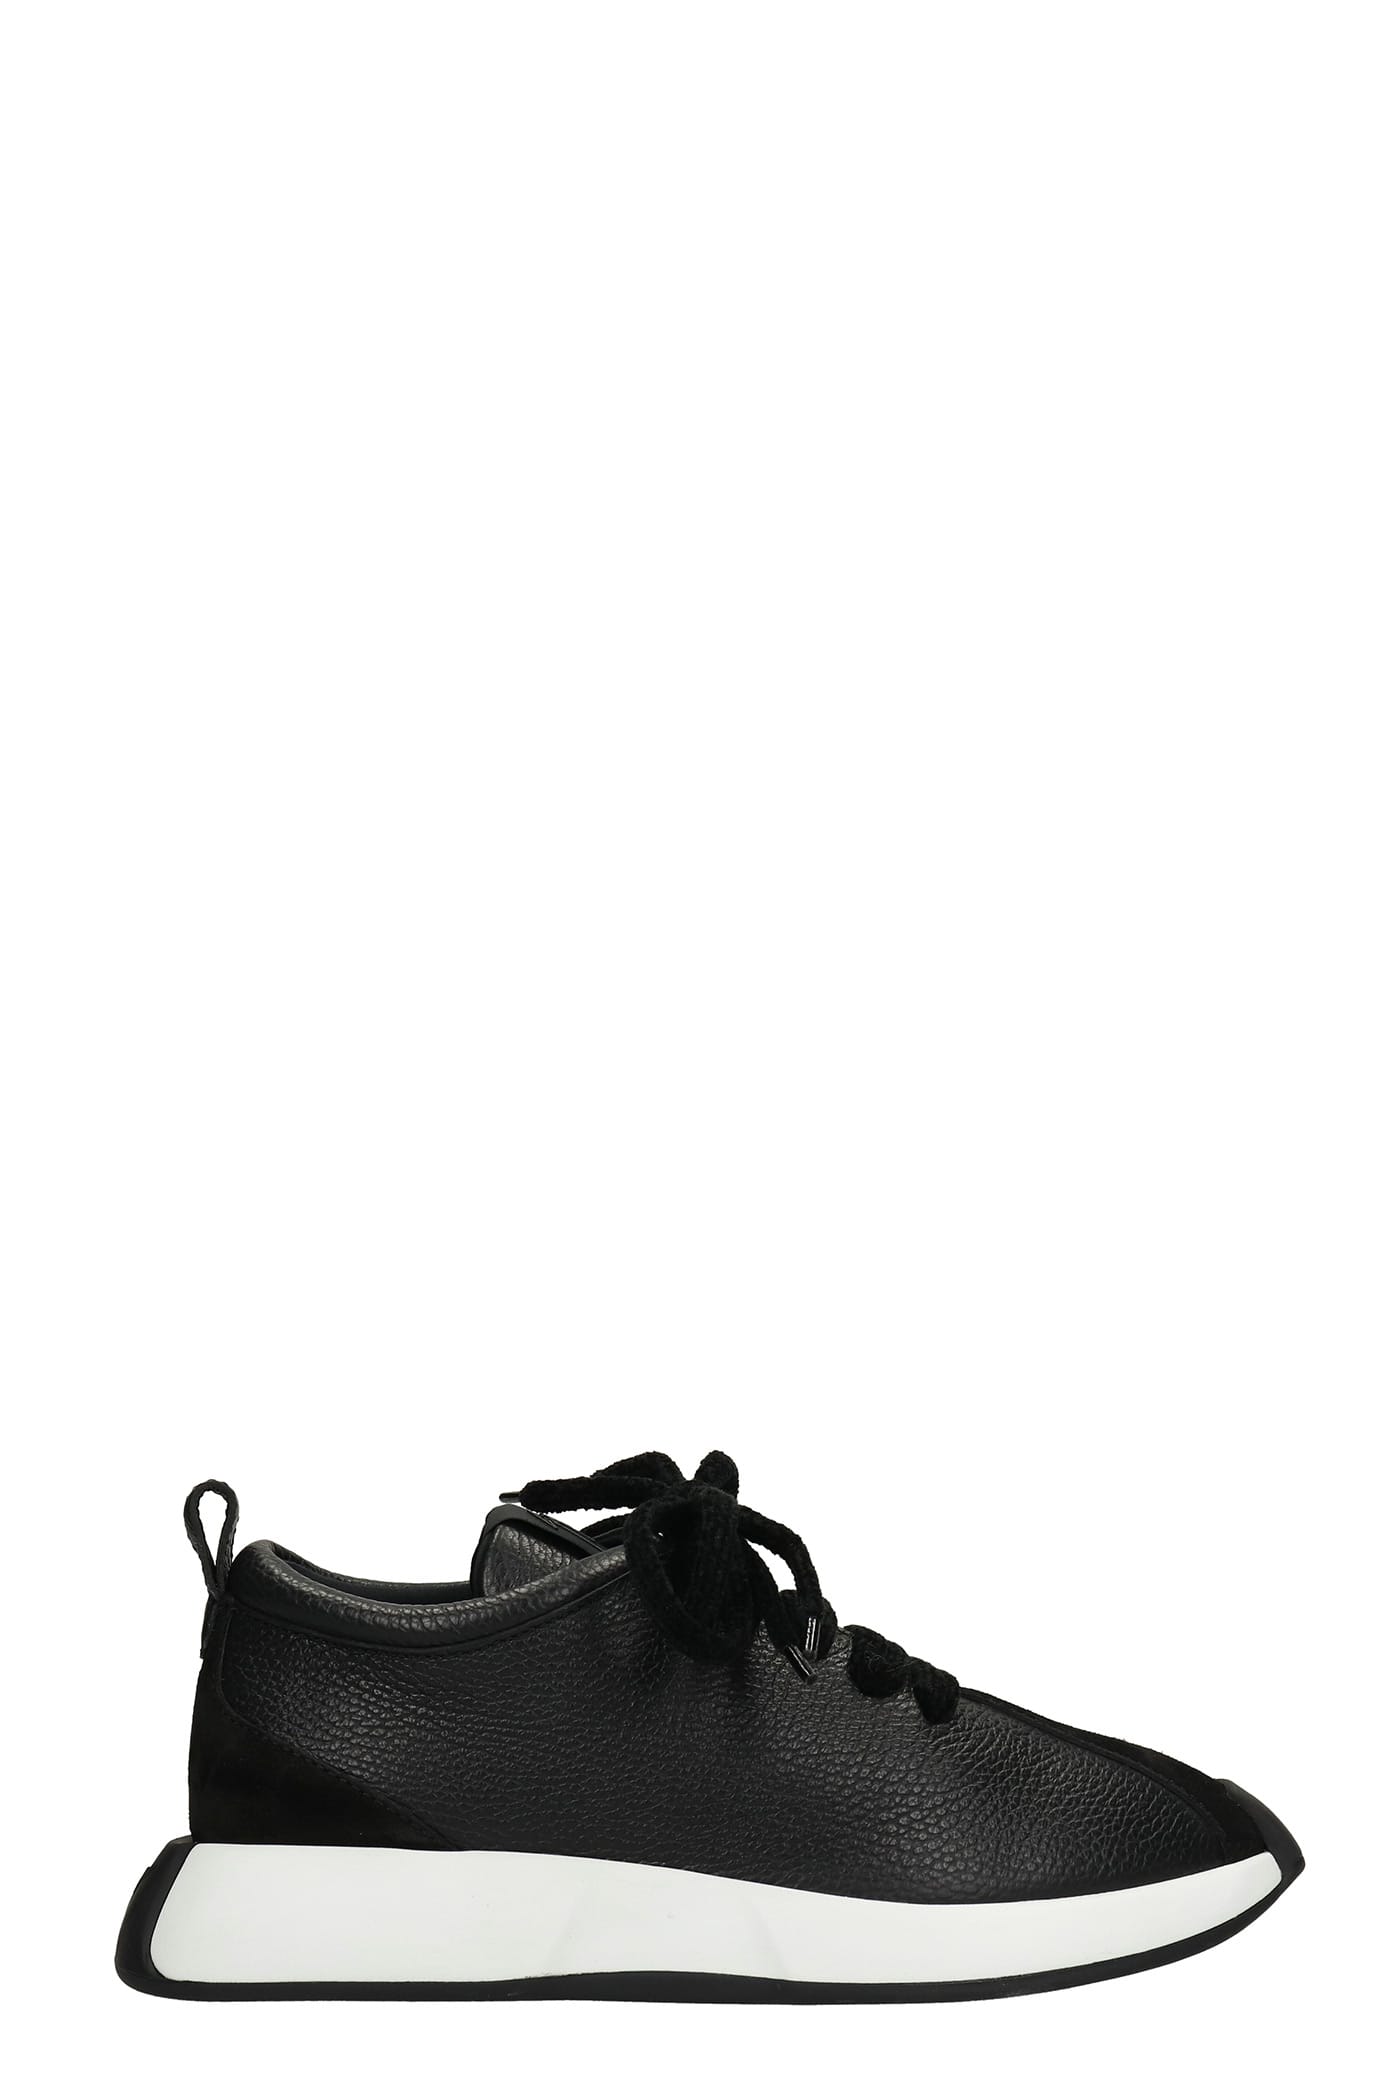 Giuseppe Zanotti Ferox Sneakers In Black Suede And Leather